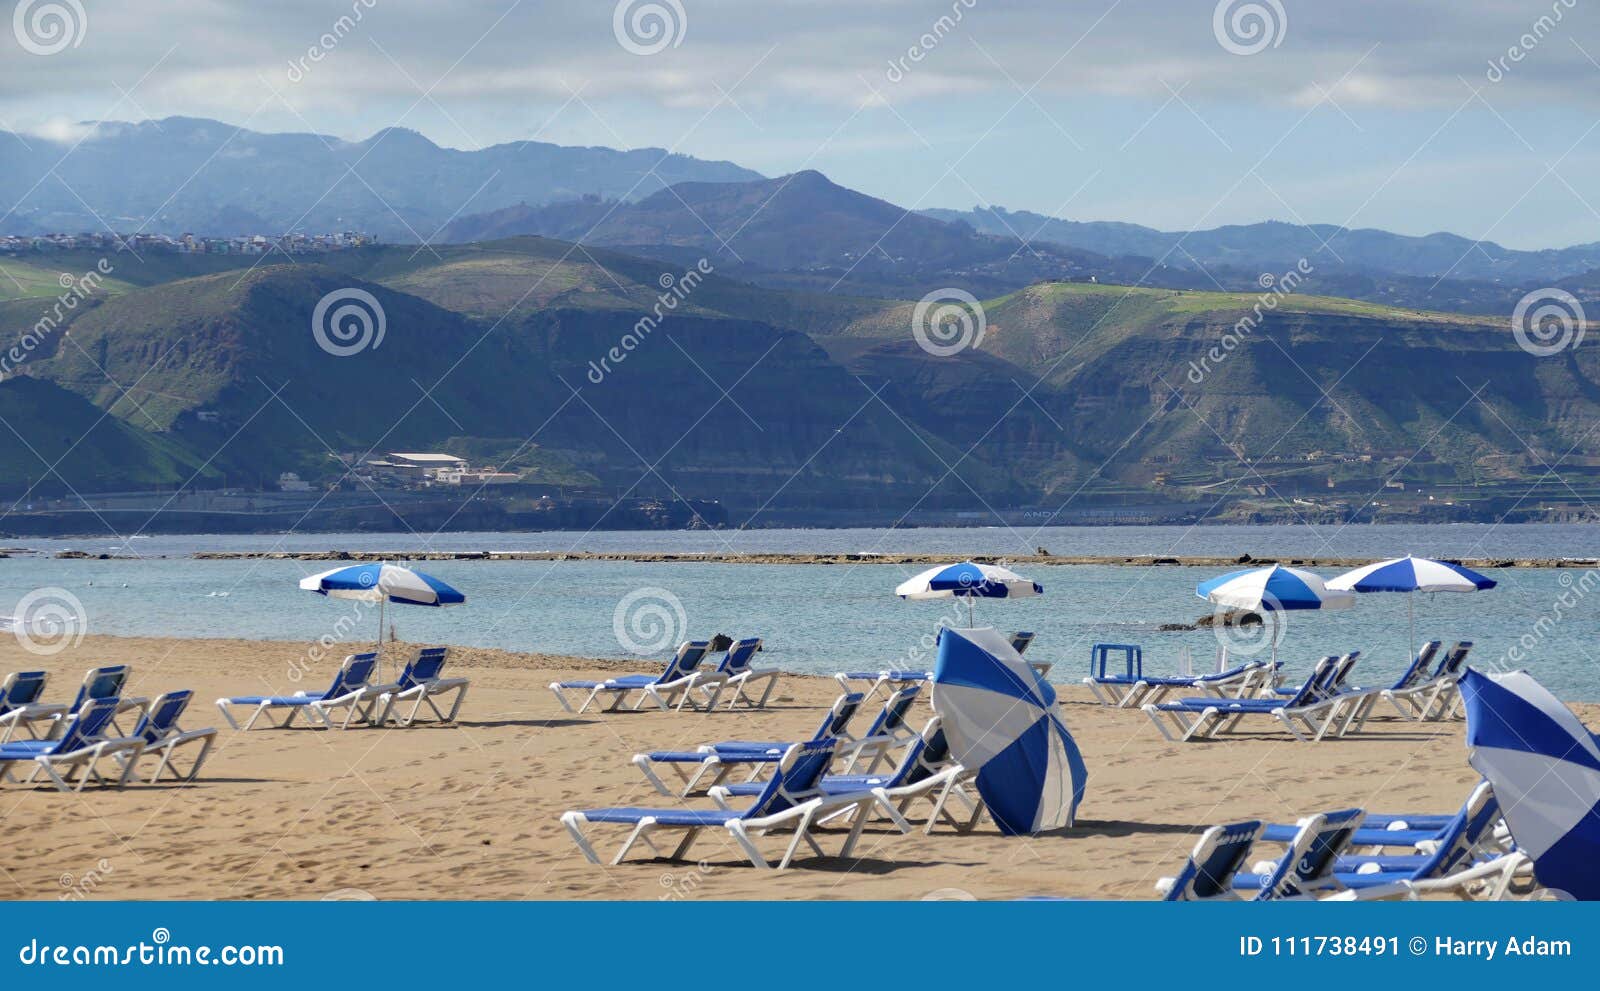 gran canaria - spain, sandy beach with sunbeds and umbrellas